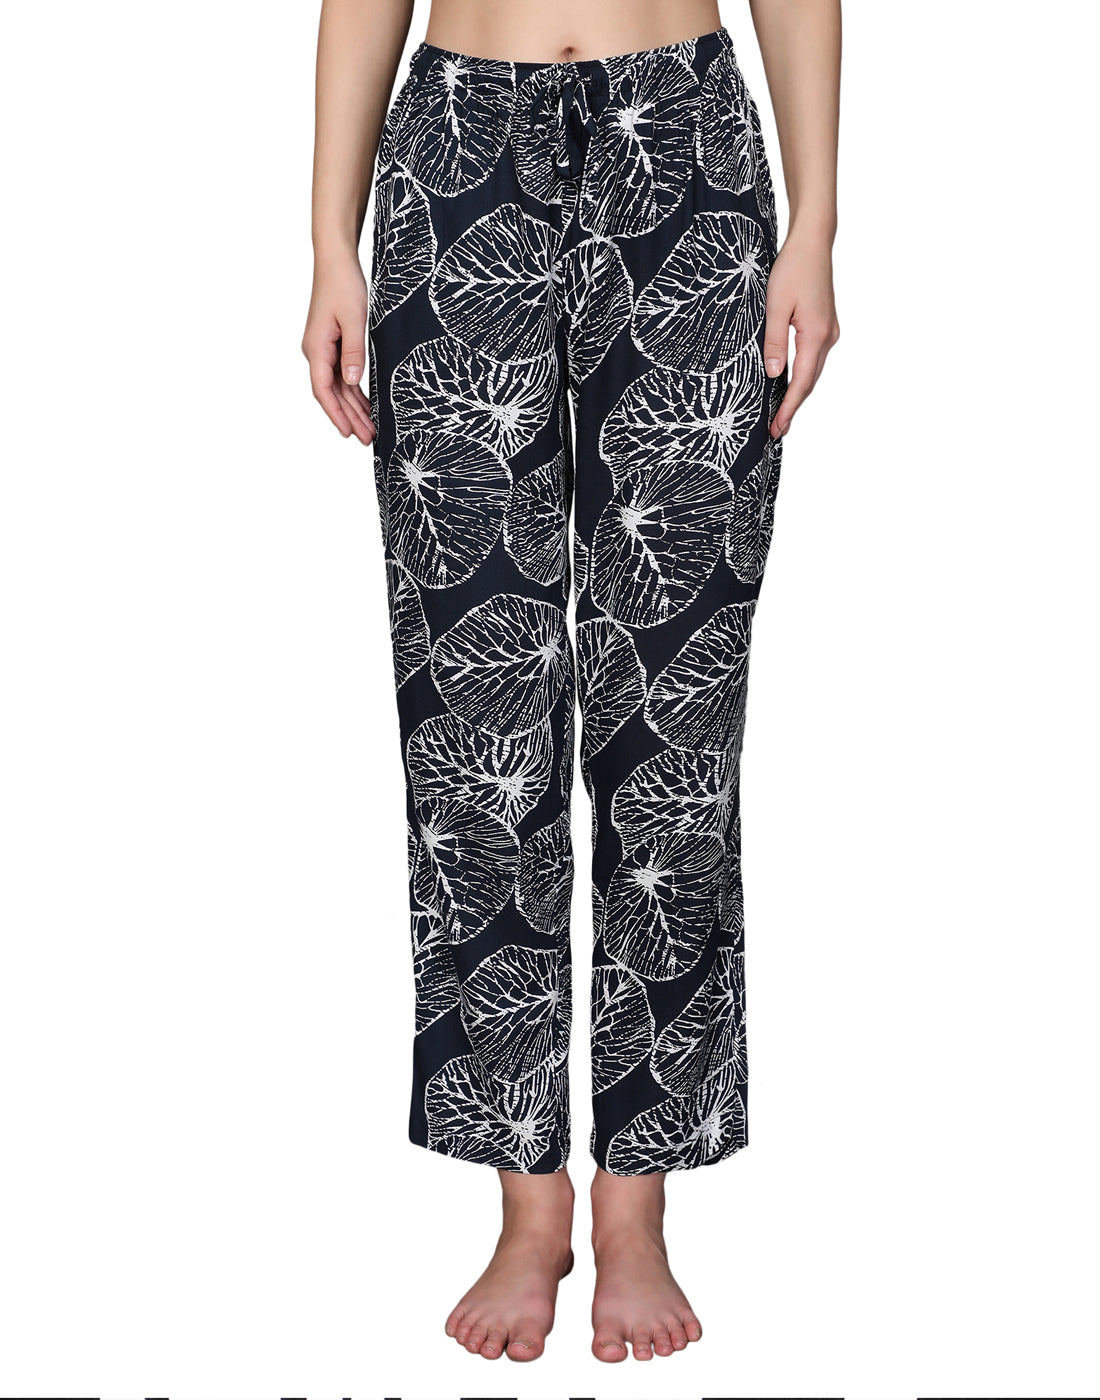 Pyjama Set for Women-Black Shell Print